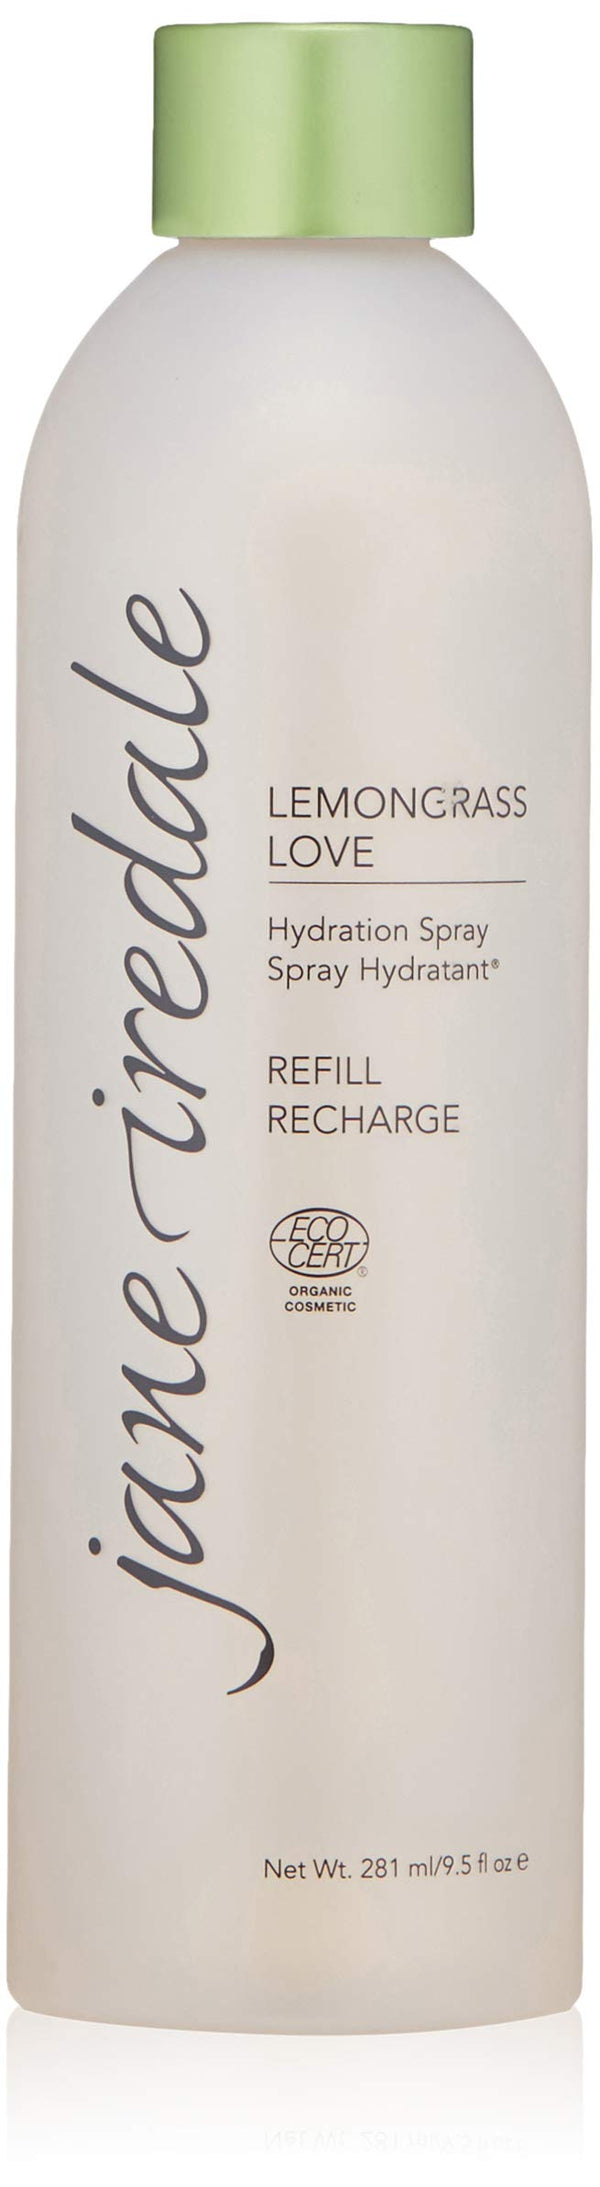 jane iredale Lemongrass Love Hydration Spray Refill 281 ml